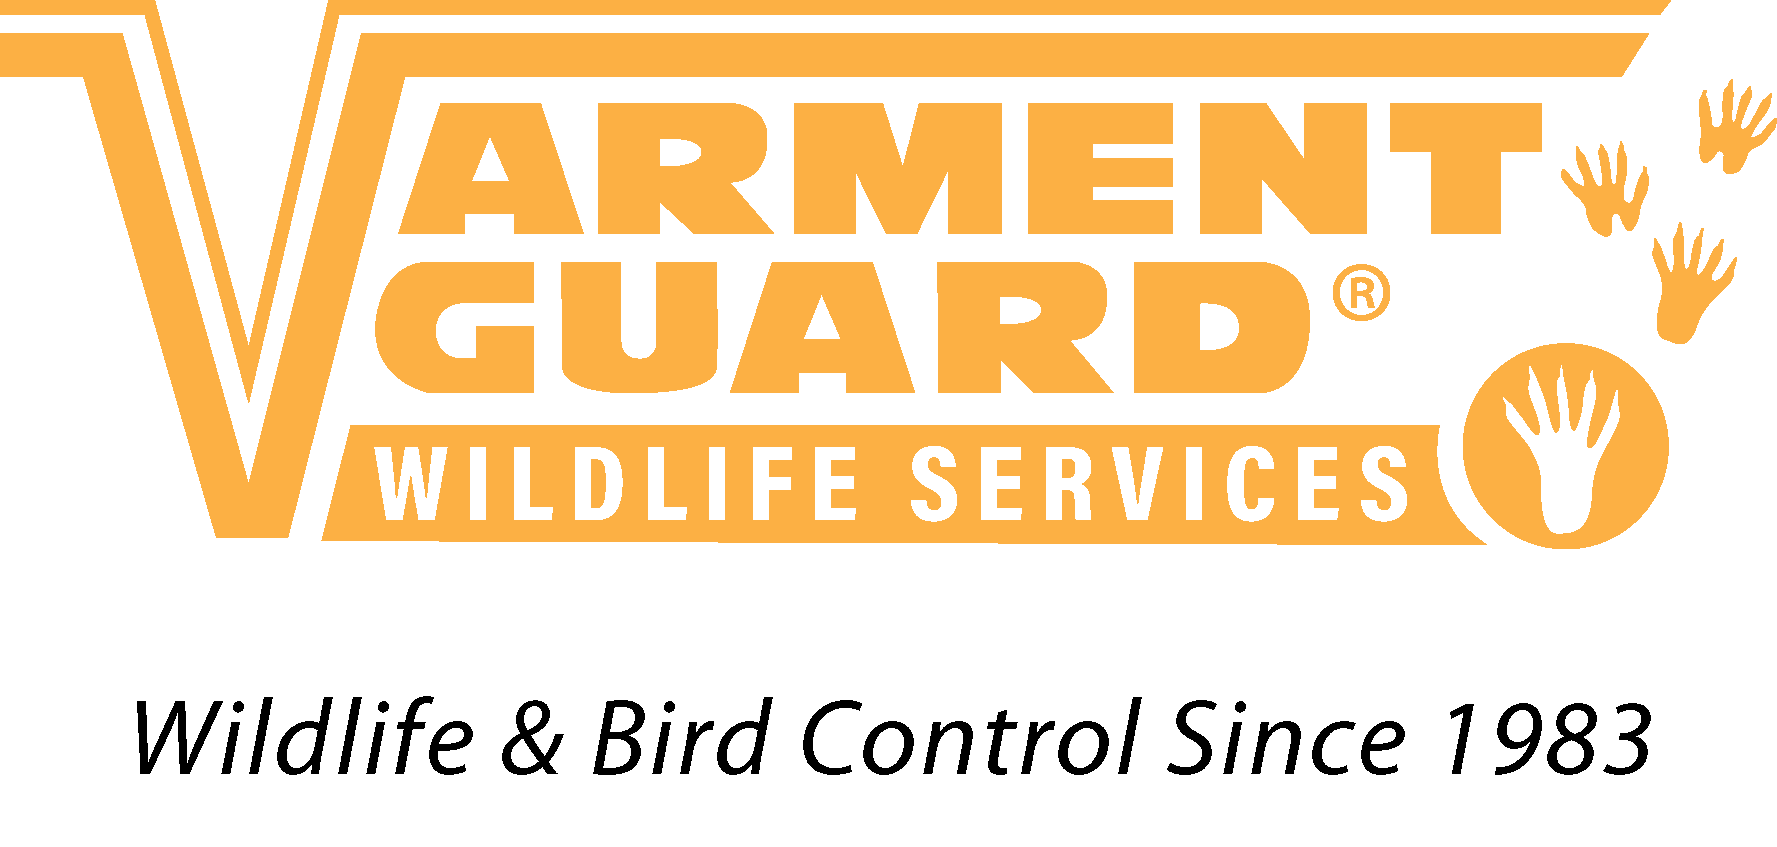 Varment Guard logo